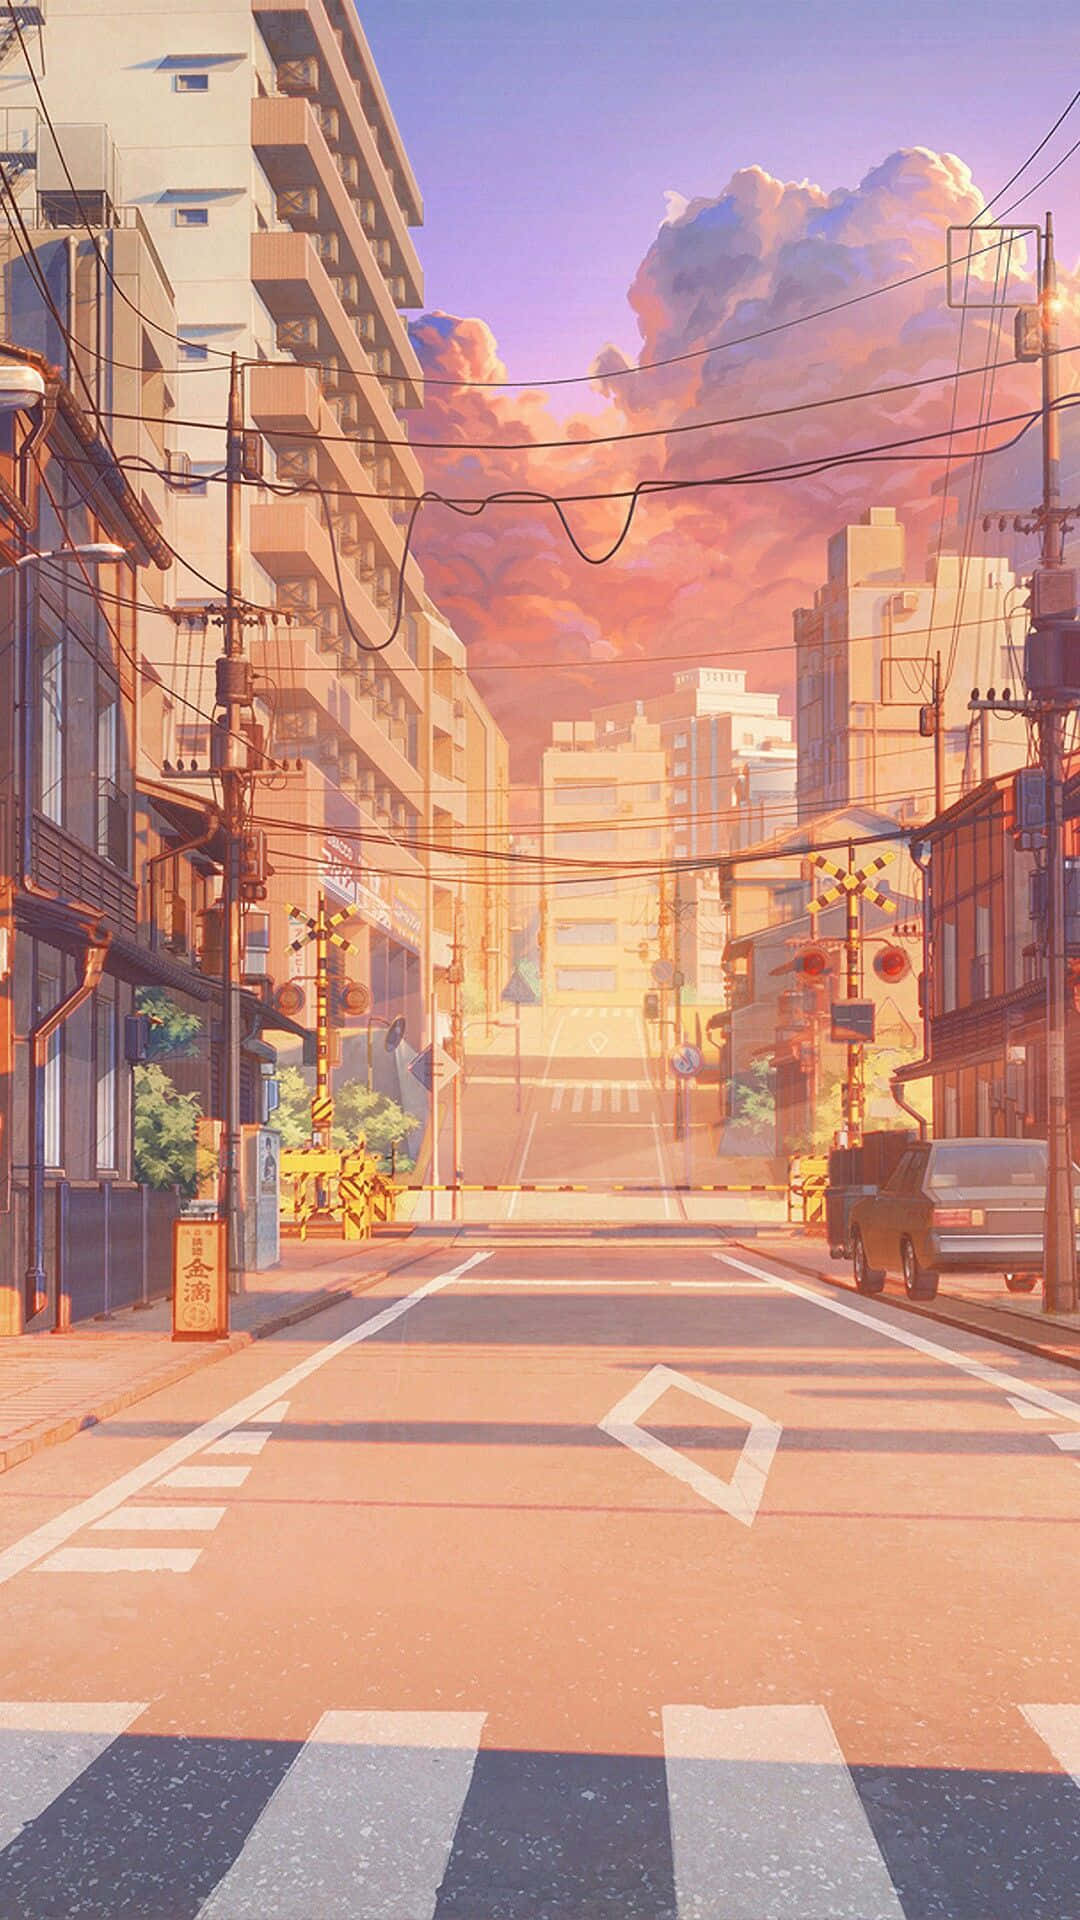 Aesthetic Anime Sunset Sky City Background